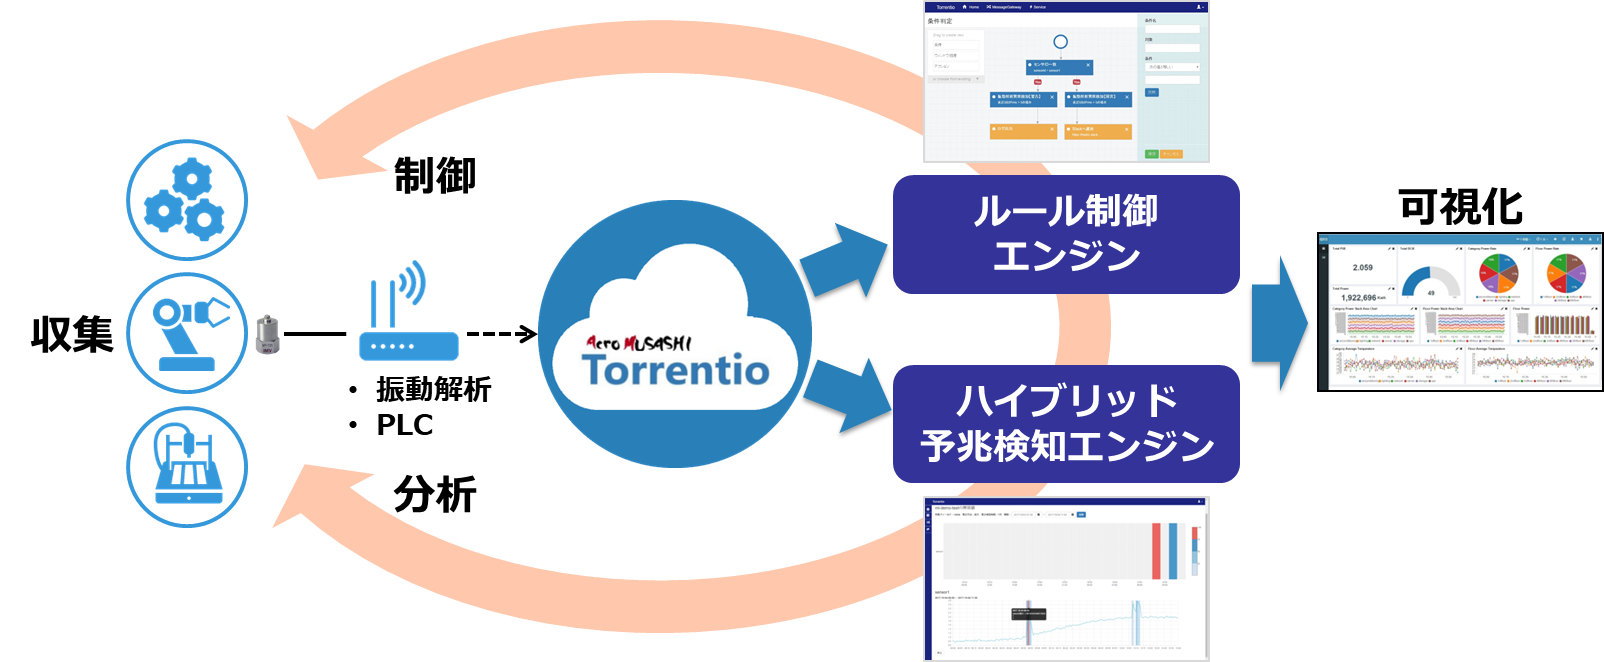 Torrentio Cloud サービスイメージ